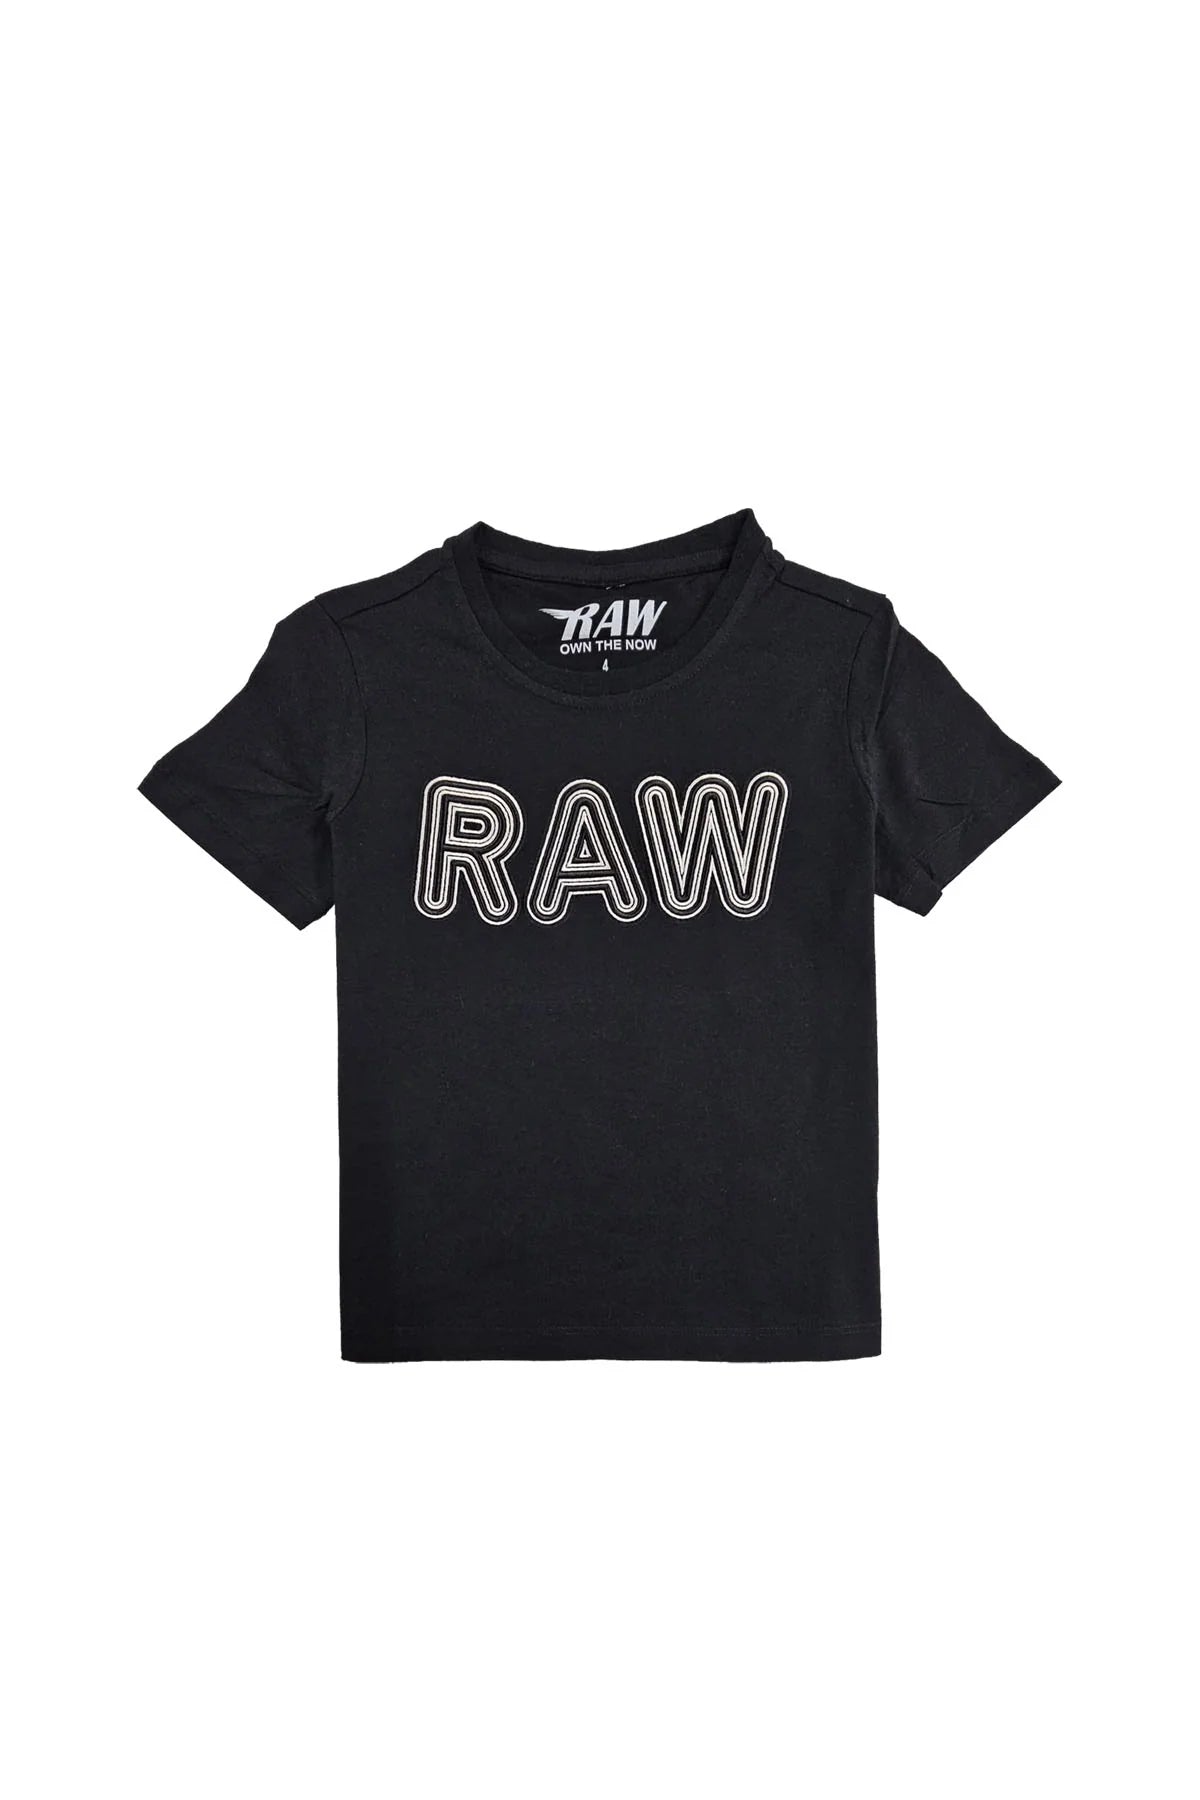 Kids "Raw" Embroidery T-Shirt - Black/White